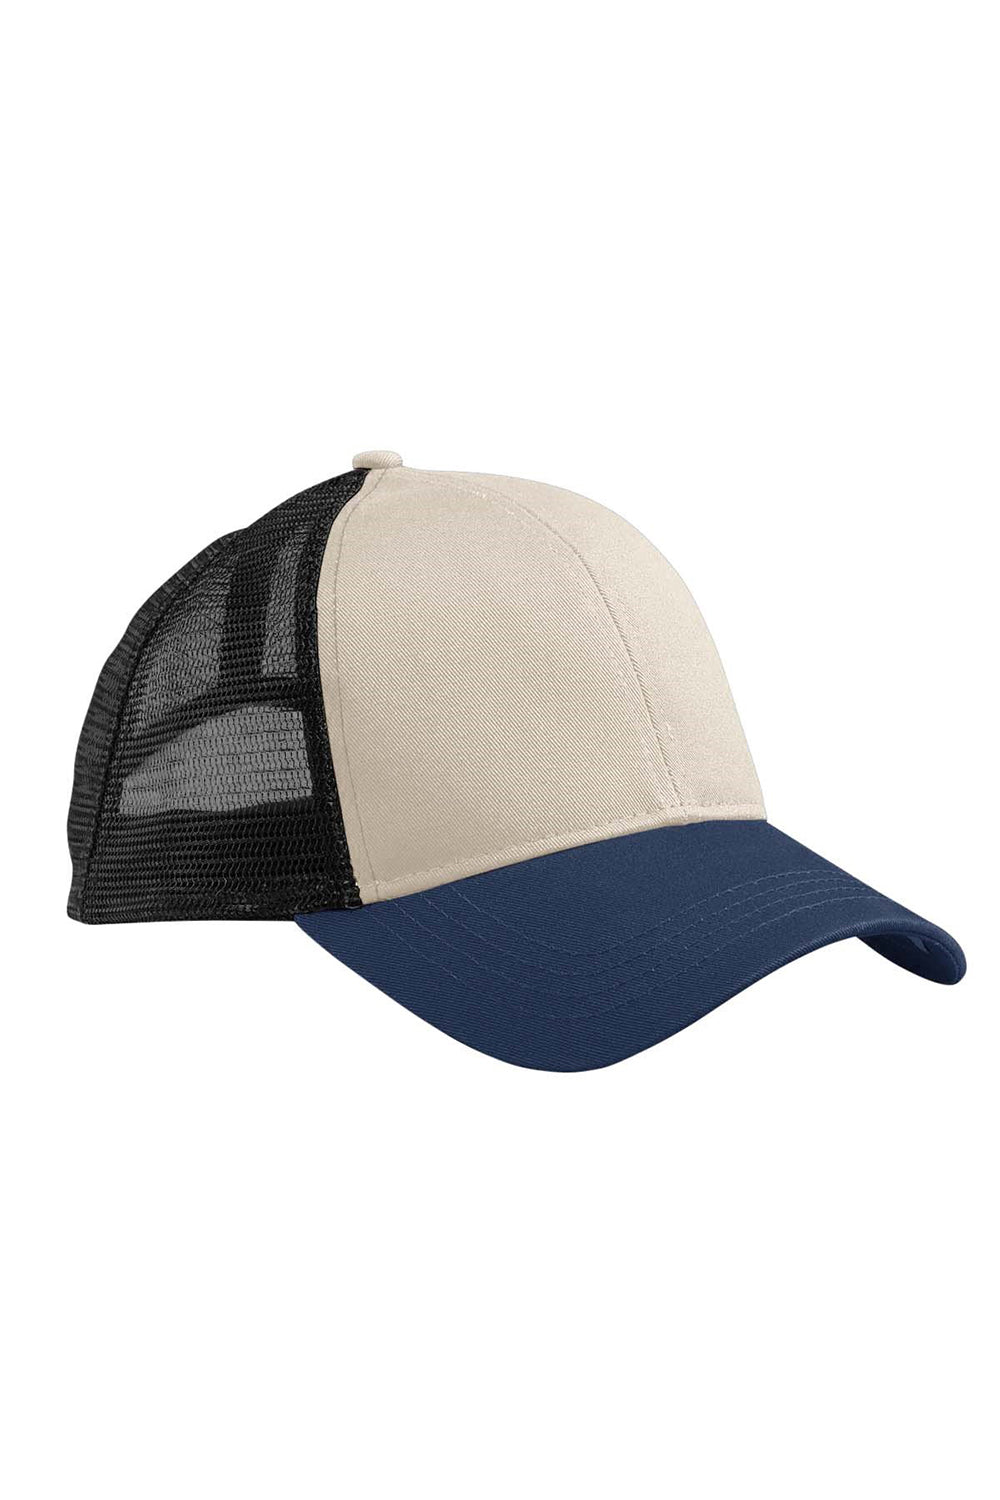 Econscious EC7070 Mens Adjustable Trucker Hat Oyester/Pacific Blue/Black Front